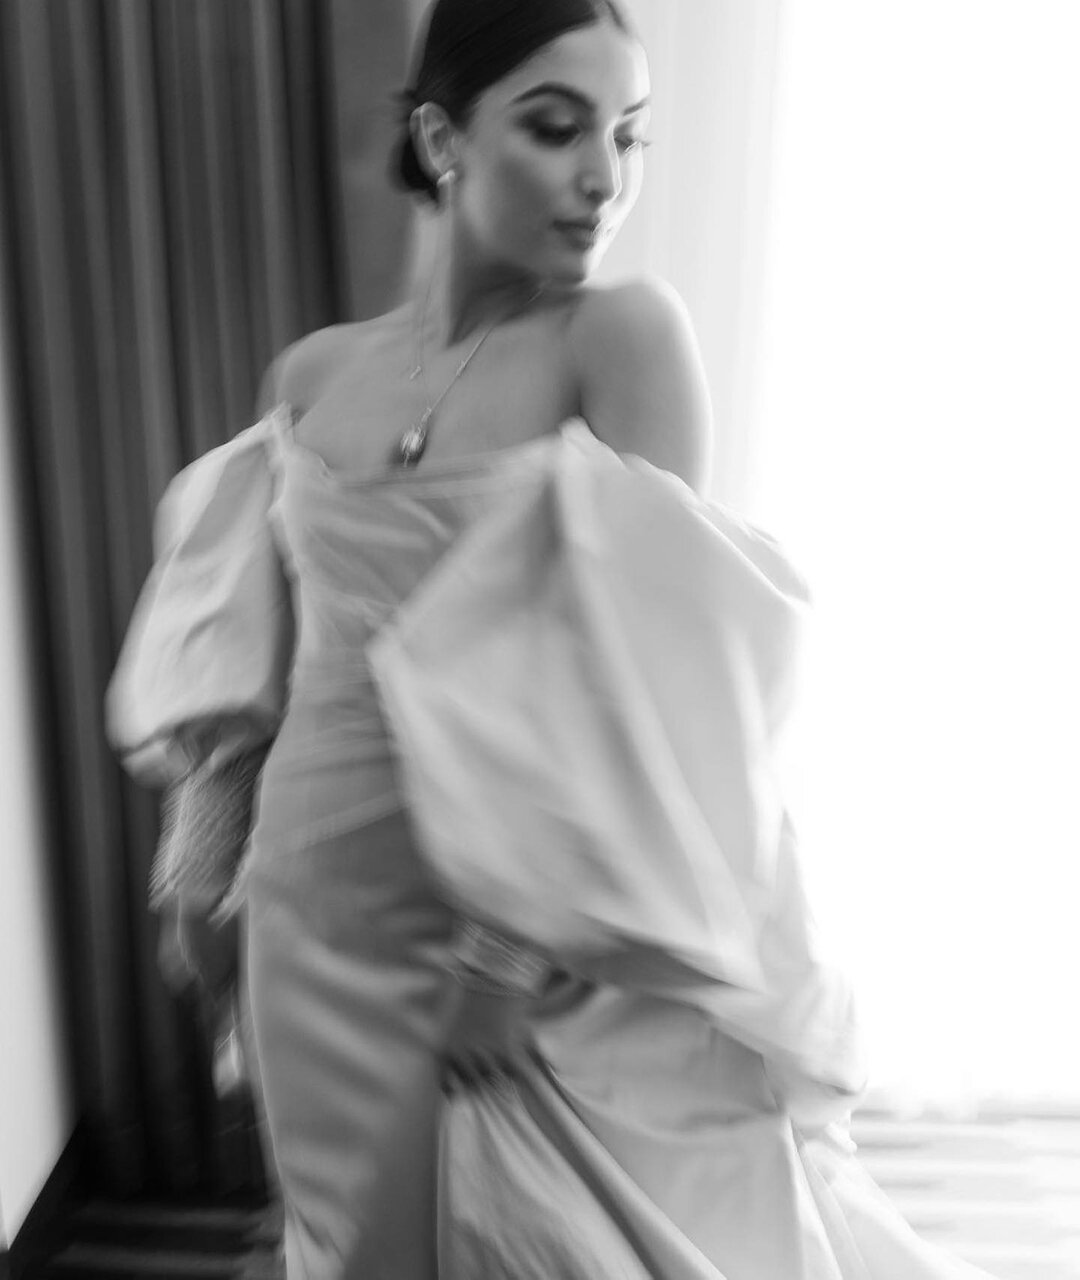 L D G  B R I D E | Layal&rsquo;s regal gown was cut to drape with beautiful fluidity and poetic textures. ​​​​​​​​
​​​​​​​​
CUSTOM Leah Da Gloria // @leahdagloria​​​​​​​​
Captured by @siempreweddings​​​​​​​​
​​​​​​​​
__​​​​​​​​
#LDGForeverBride #Leah